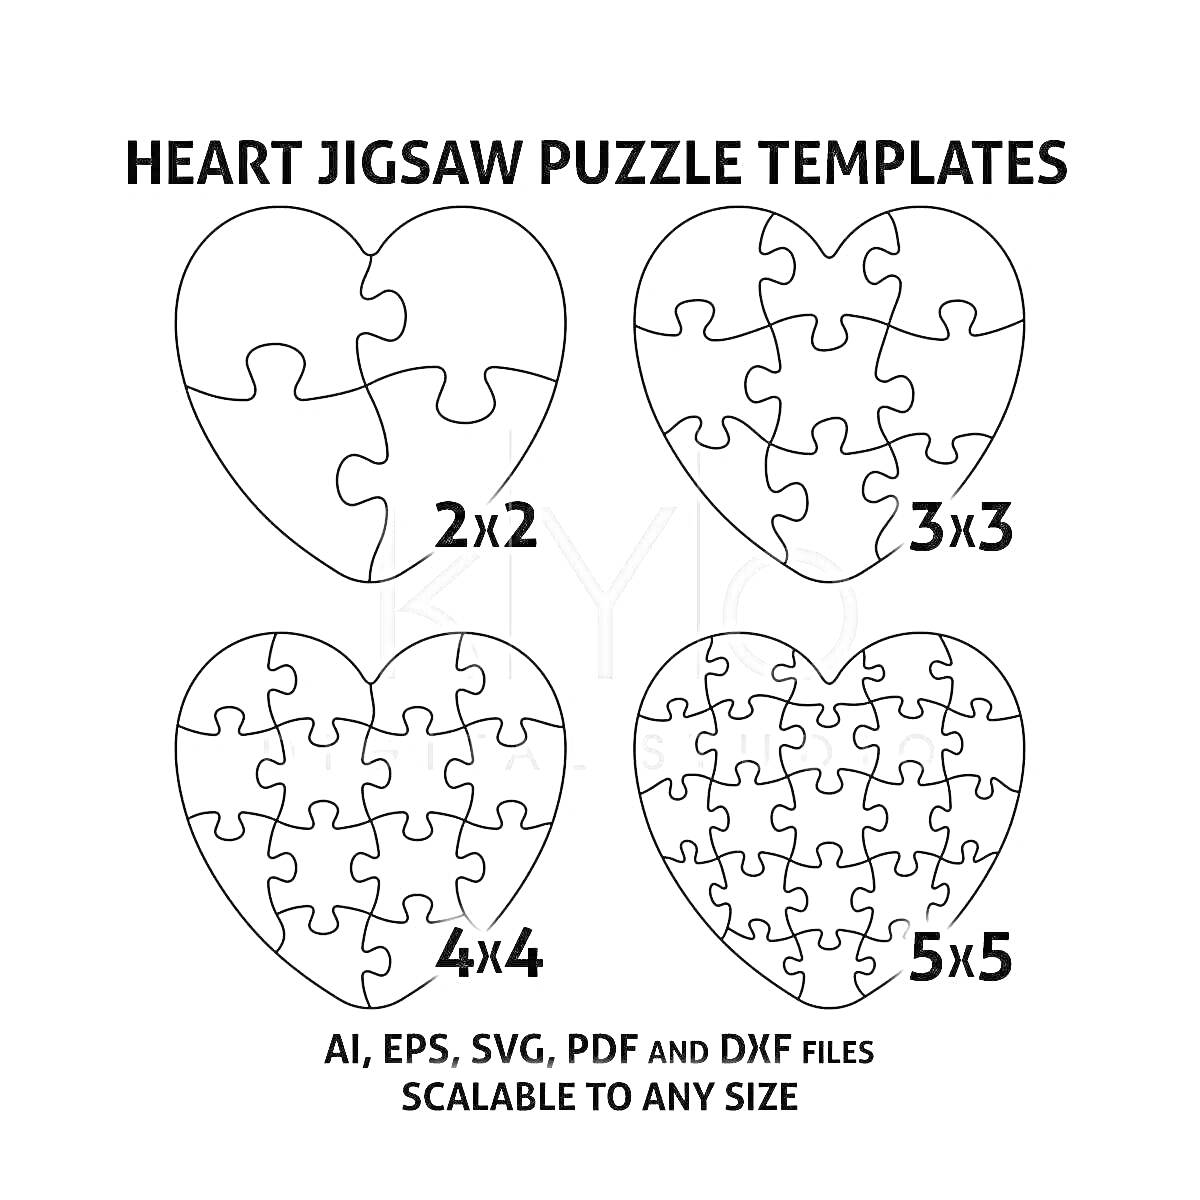 Шаблоны пазла в форме сердца со схемами на 2x2, 3x3, 4x4 и 5x5 частей